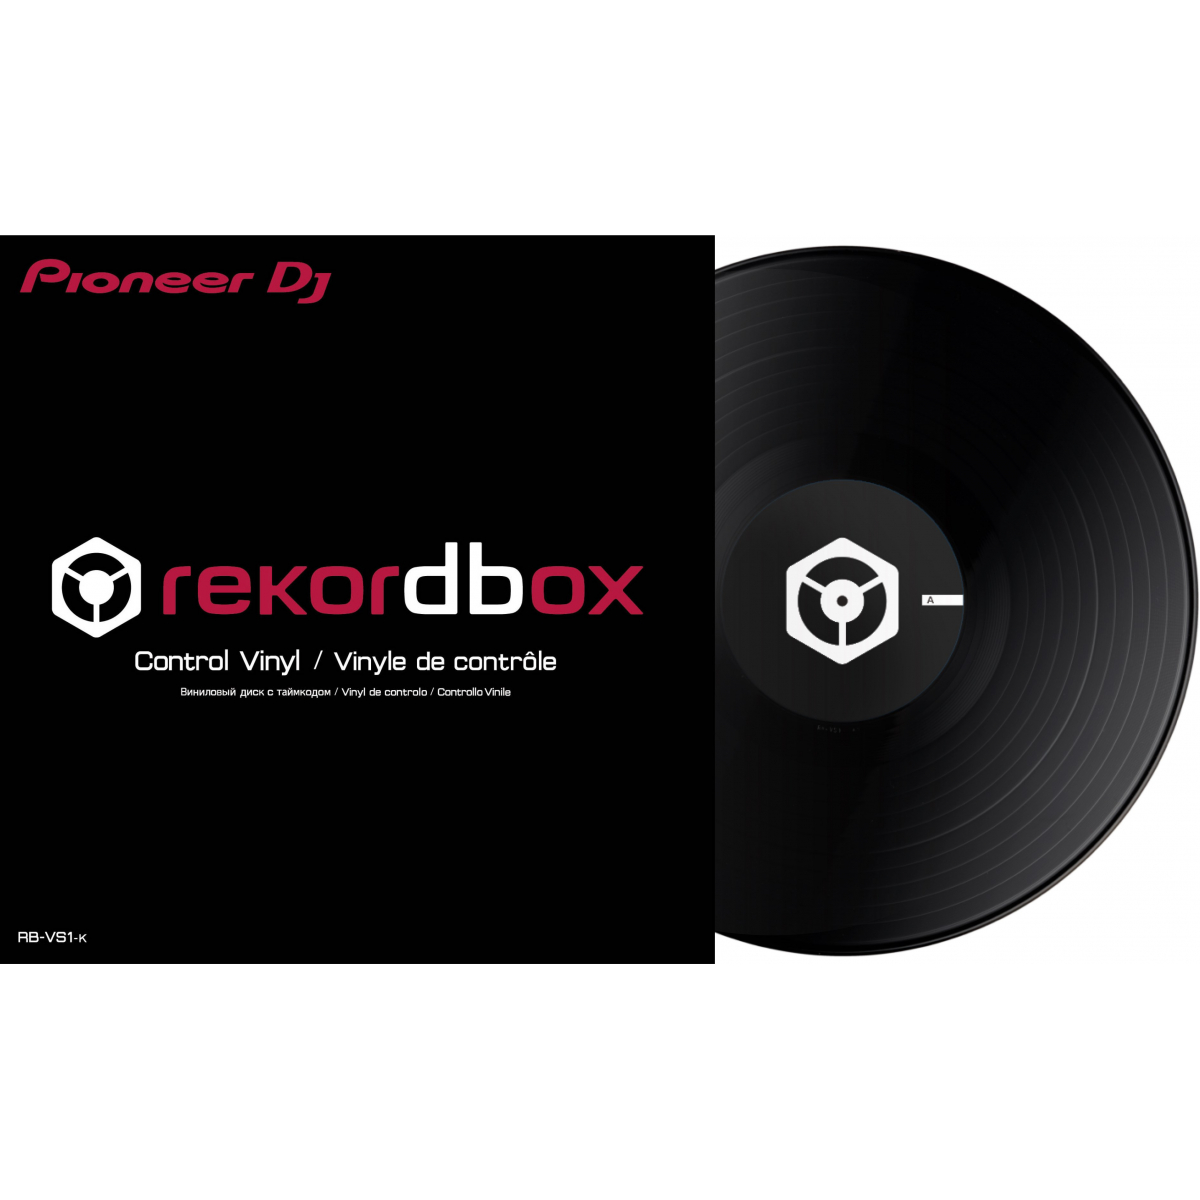 Vinyles time codés - Pioneer DJ - RB-VS1-K vinyl rekordbox noir